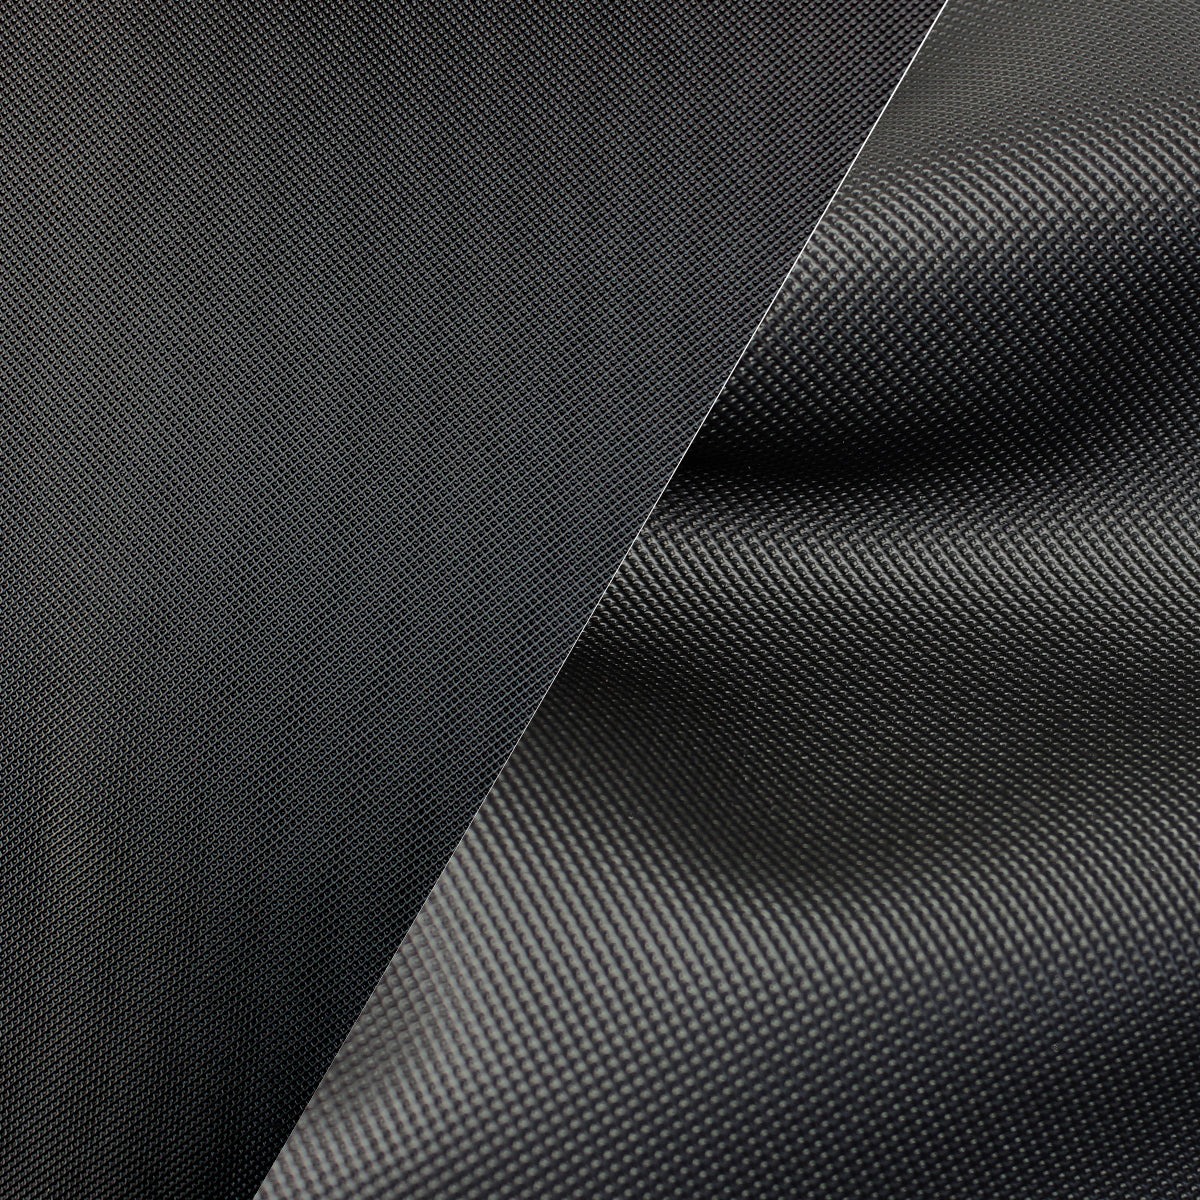 Bycast65 Black Matte Gloss Satin Mesh Pattern Faux Leather Marine Vinyl Fabric display